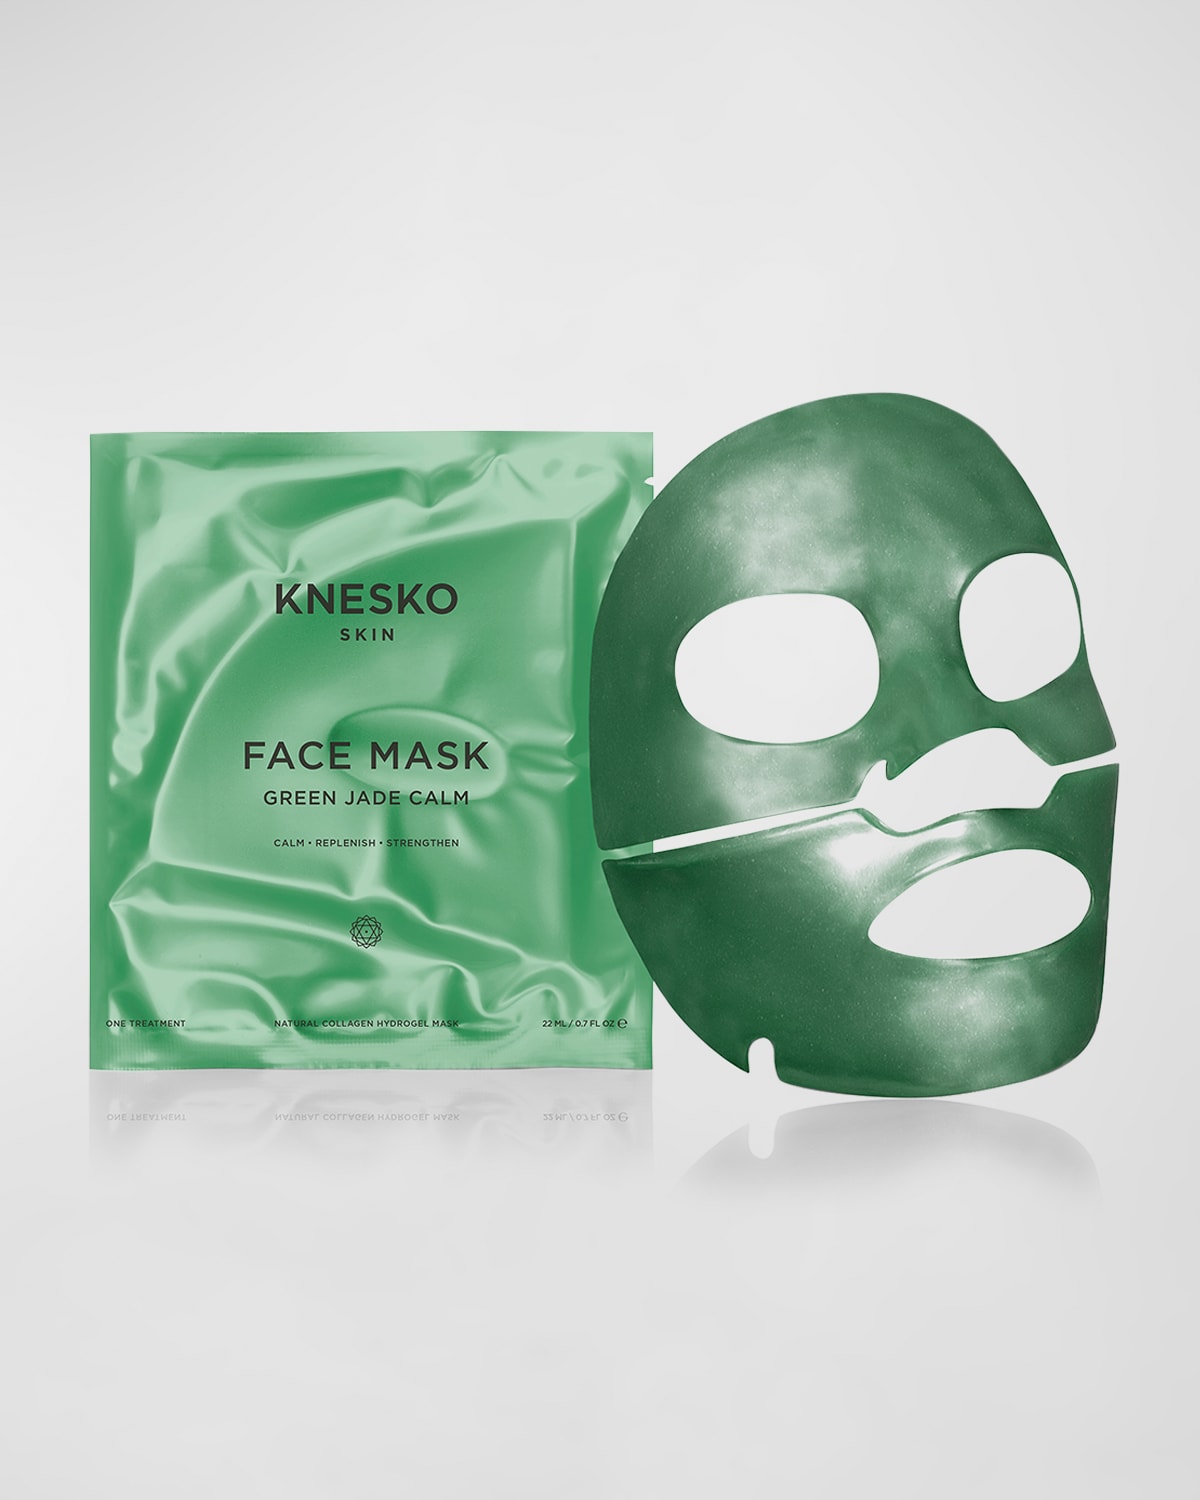 Green Jade Calm Face Mask (4 Treatments)